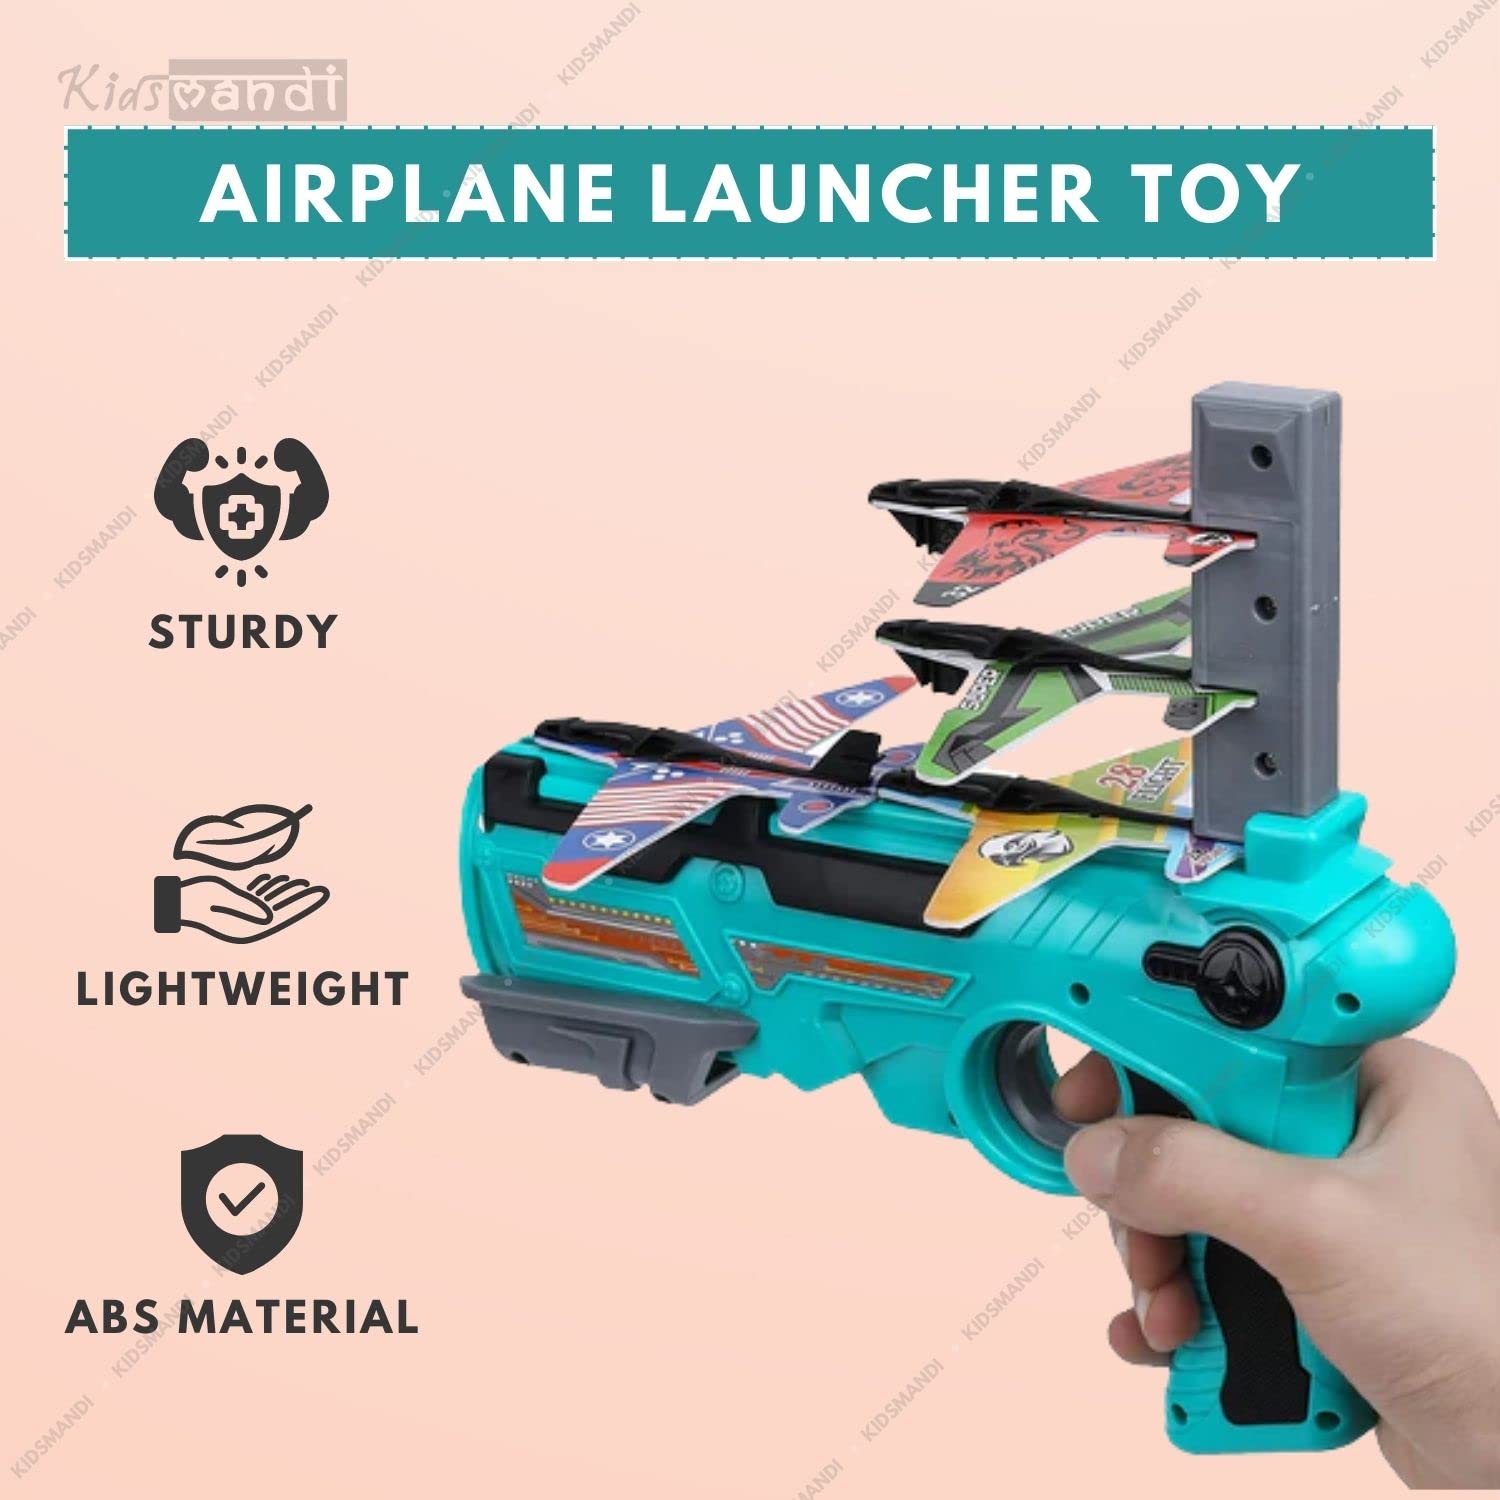 Kids Mandi airplane launcher toy gun for hours of fun.